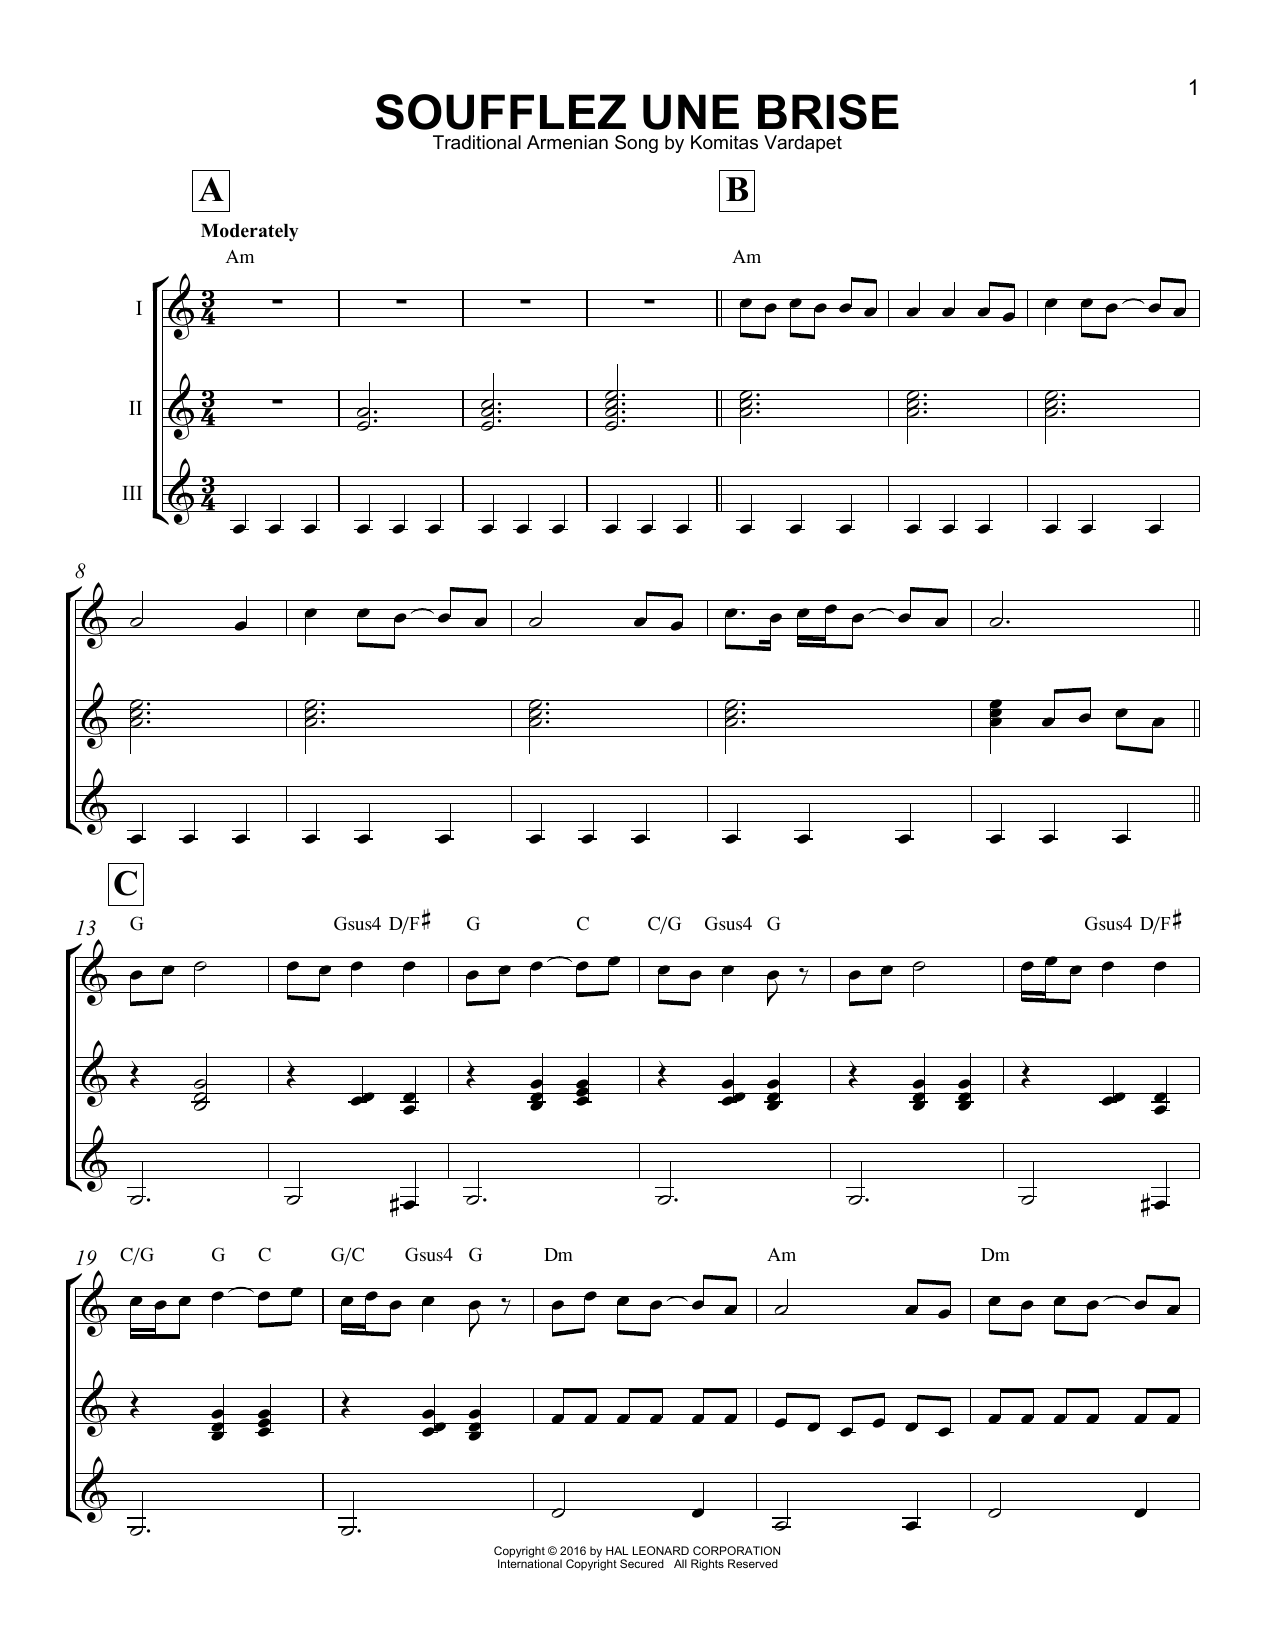 Traditional Armenian Song Soufflez Une Brise Sheet Music Notes & Chords for Guitar Ensemble - Download or Print PDF